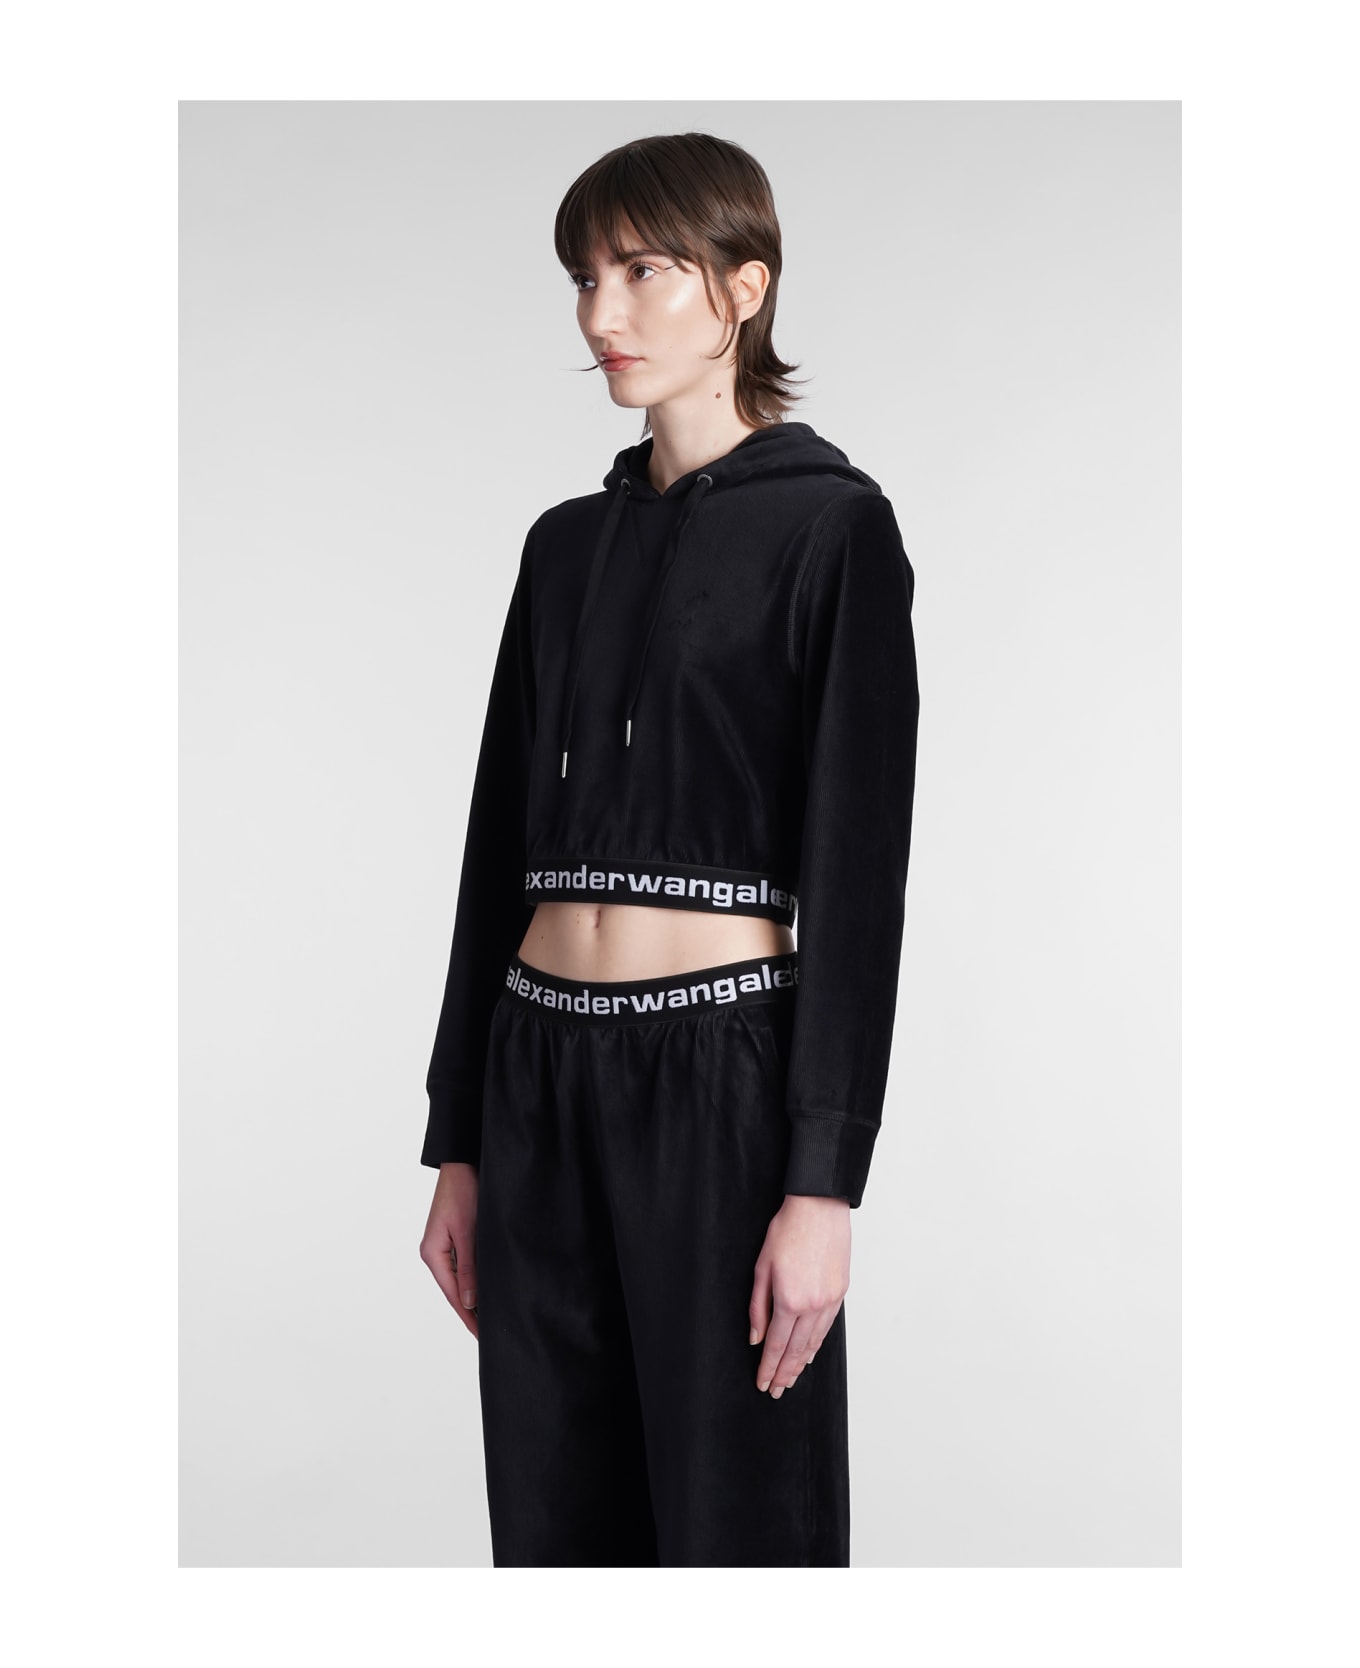 Alexander Wang Sweatshirt In Black Cotton - black